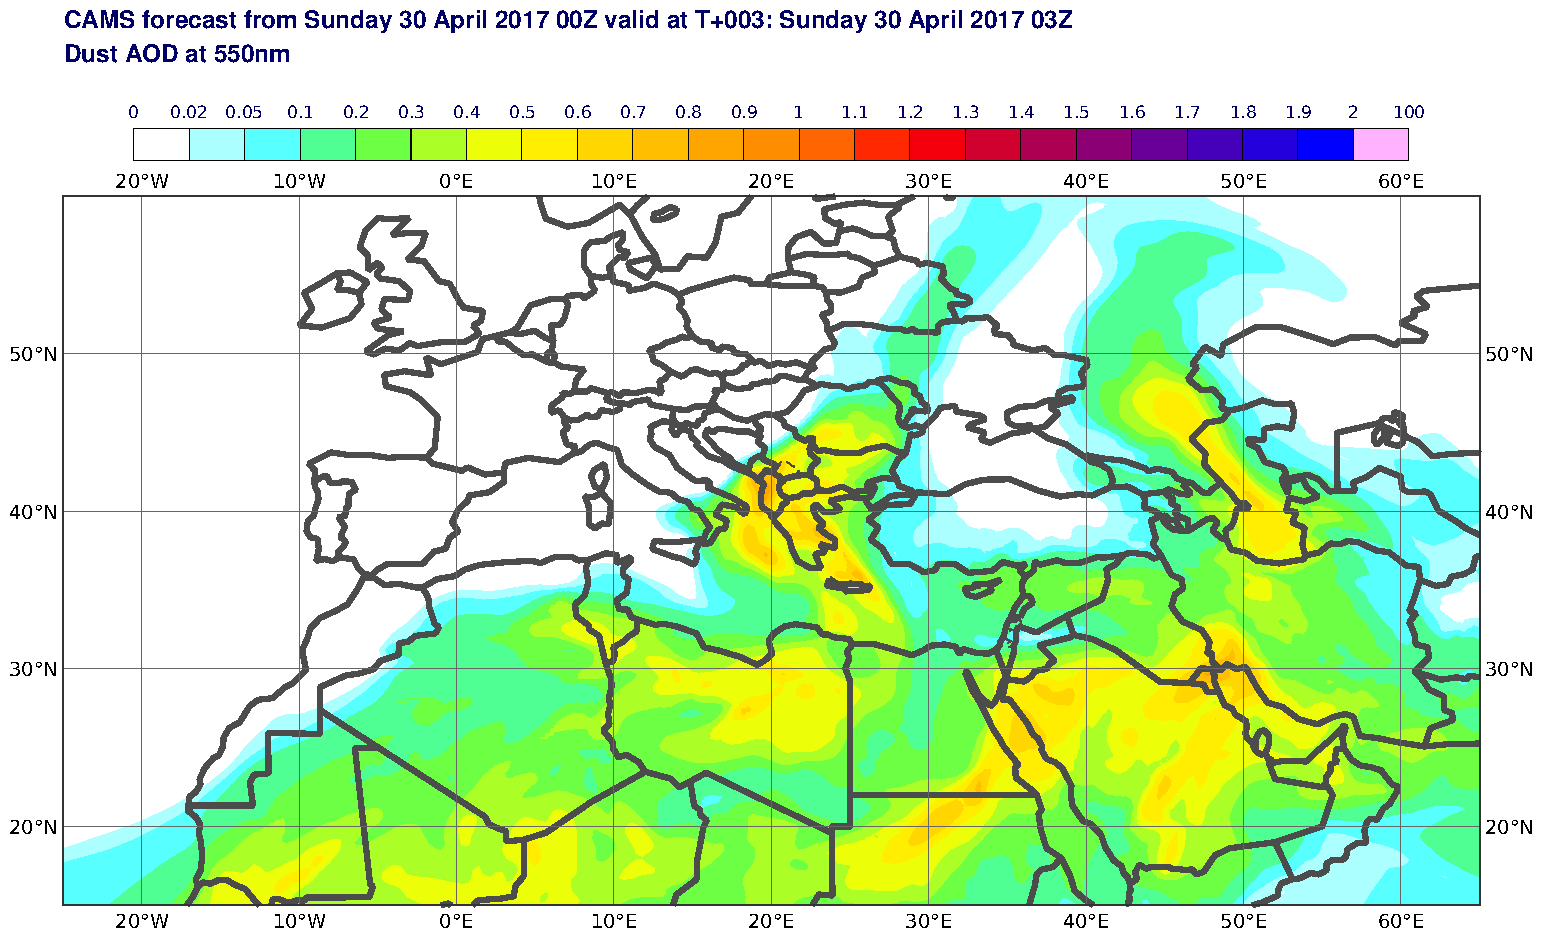 Dust AOD at 550nm valid at T3 - 2017-04-30 03:00